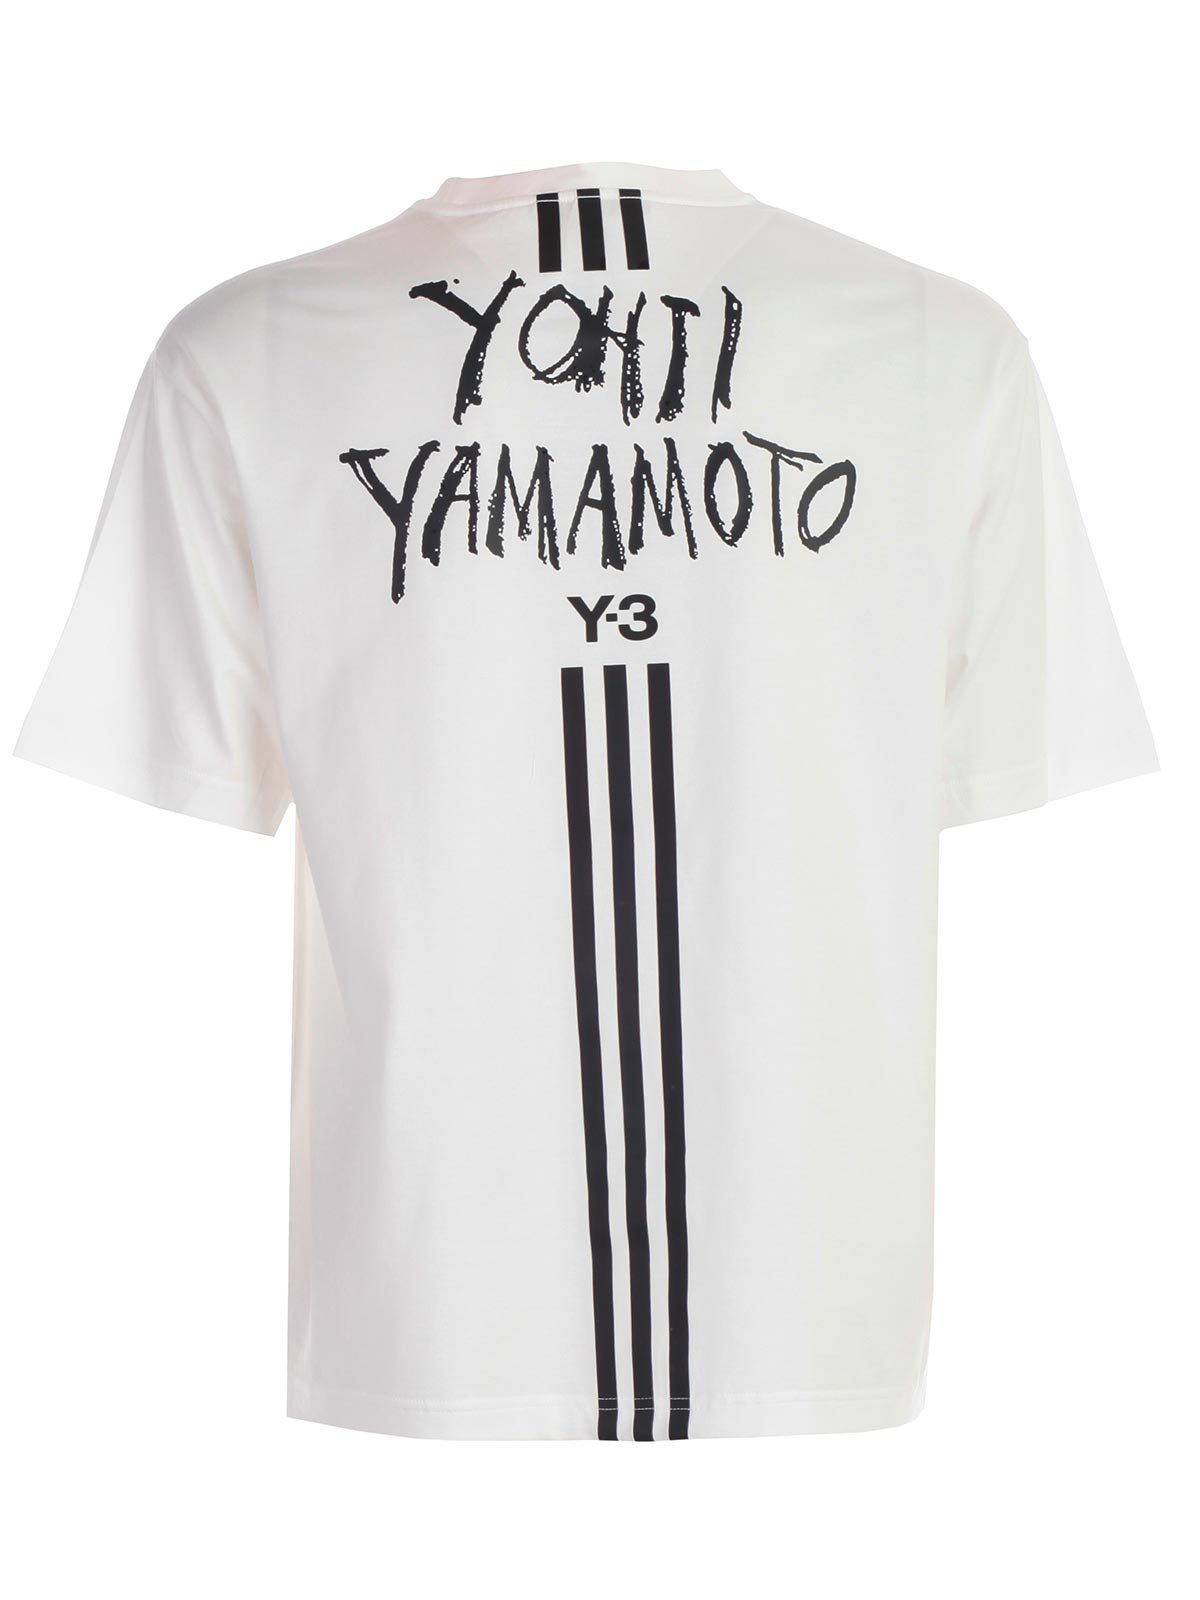 Y3 Yohji Yamamoto T Shirt on Sale, 55% OFF | www.emanagreen.com